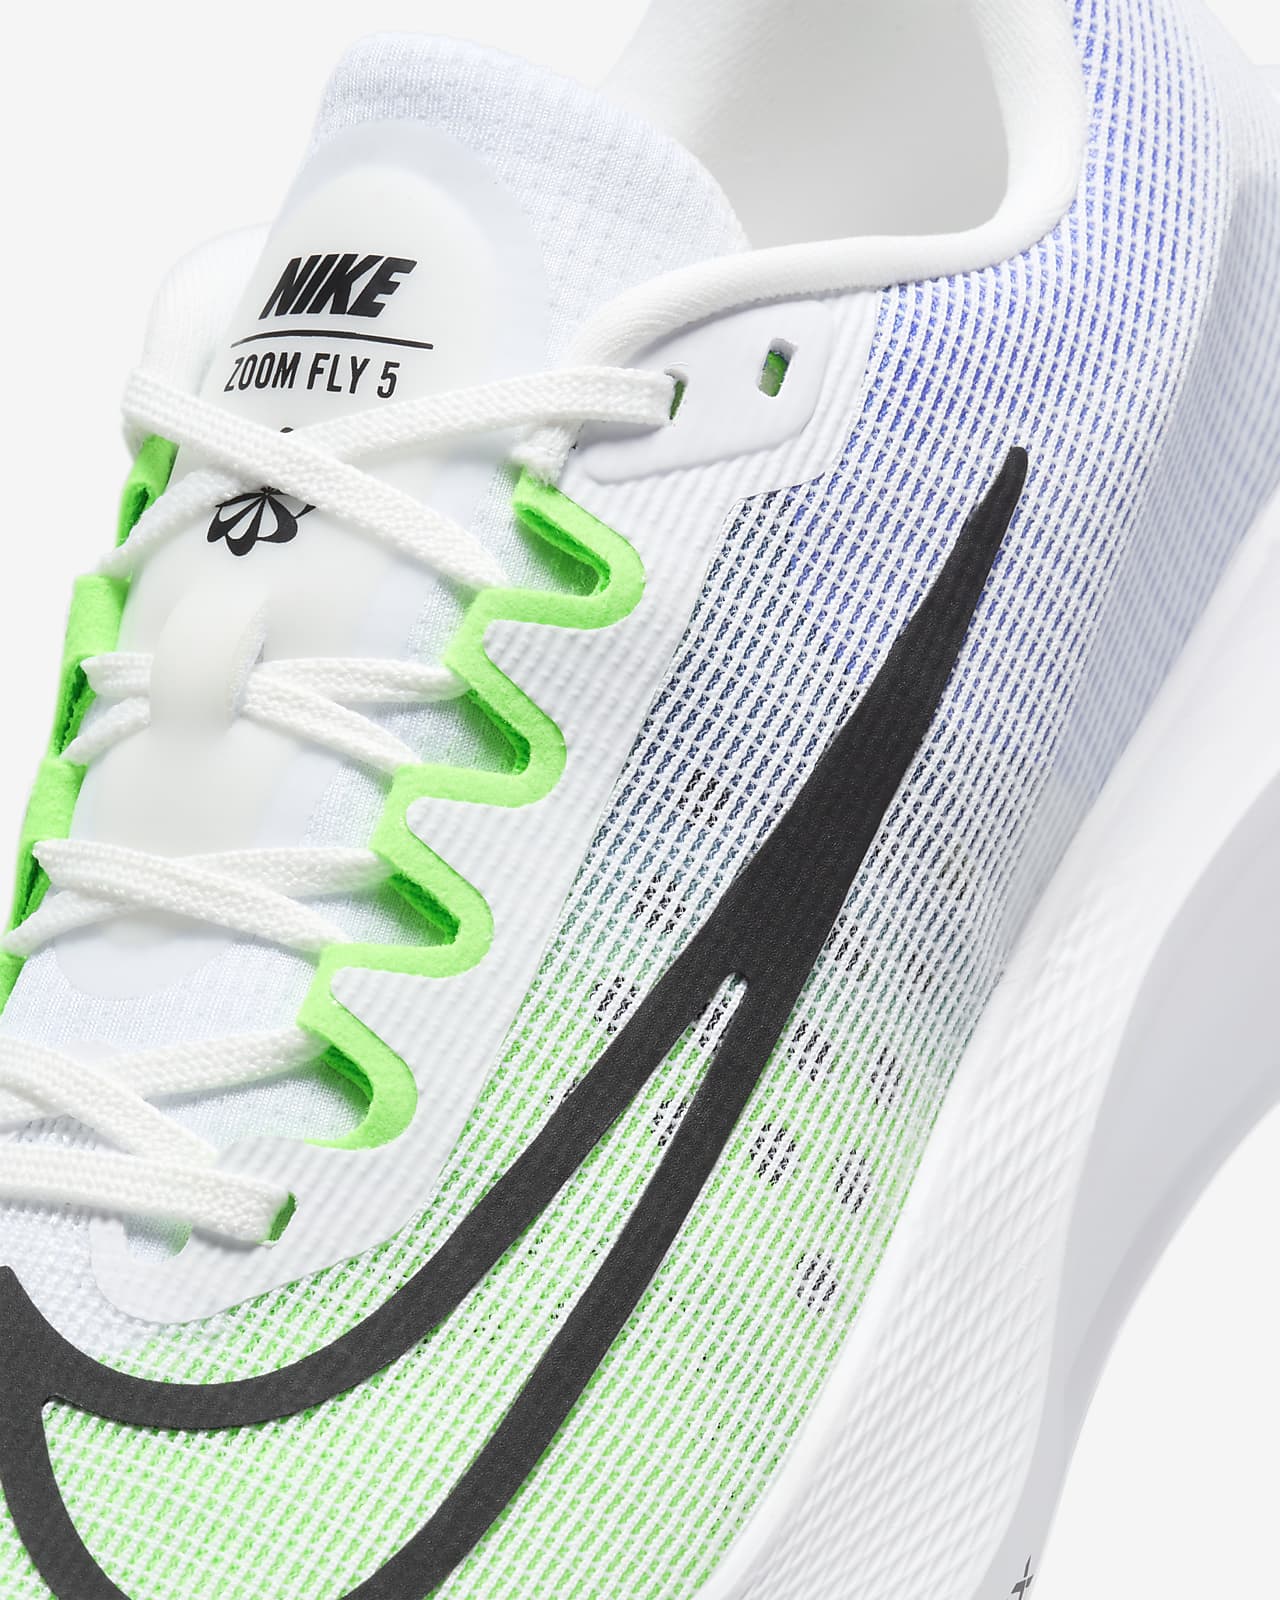 Nike Fly 5 running shoes for men